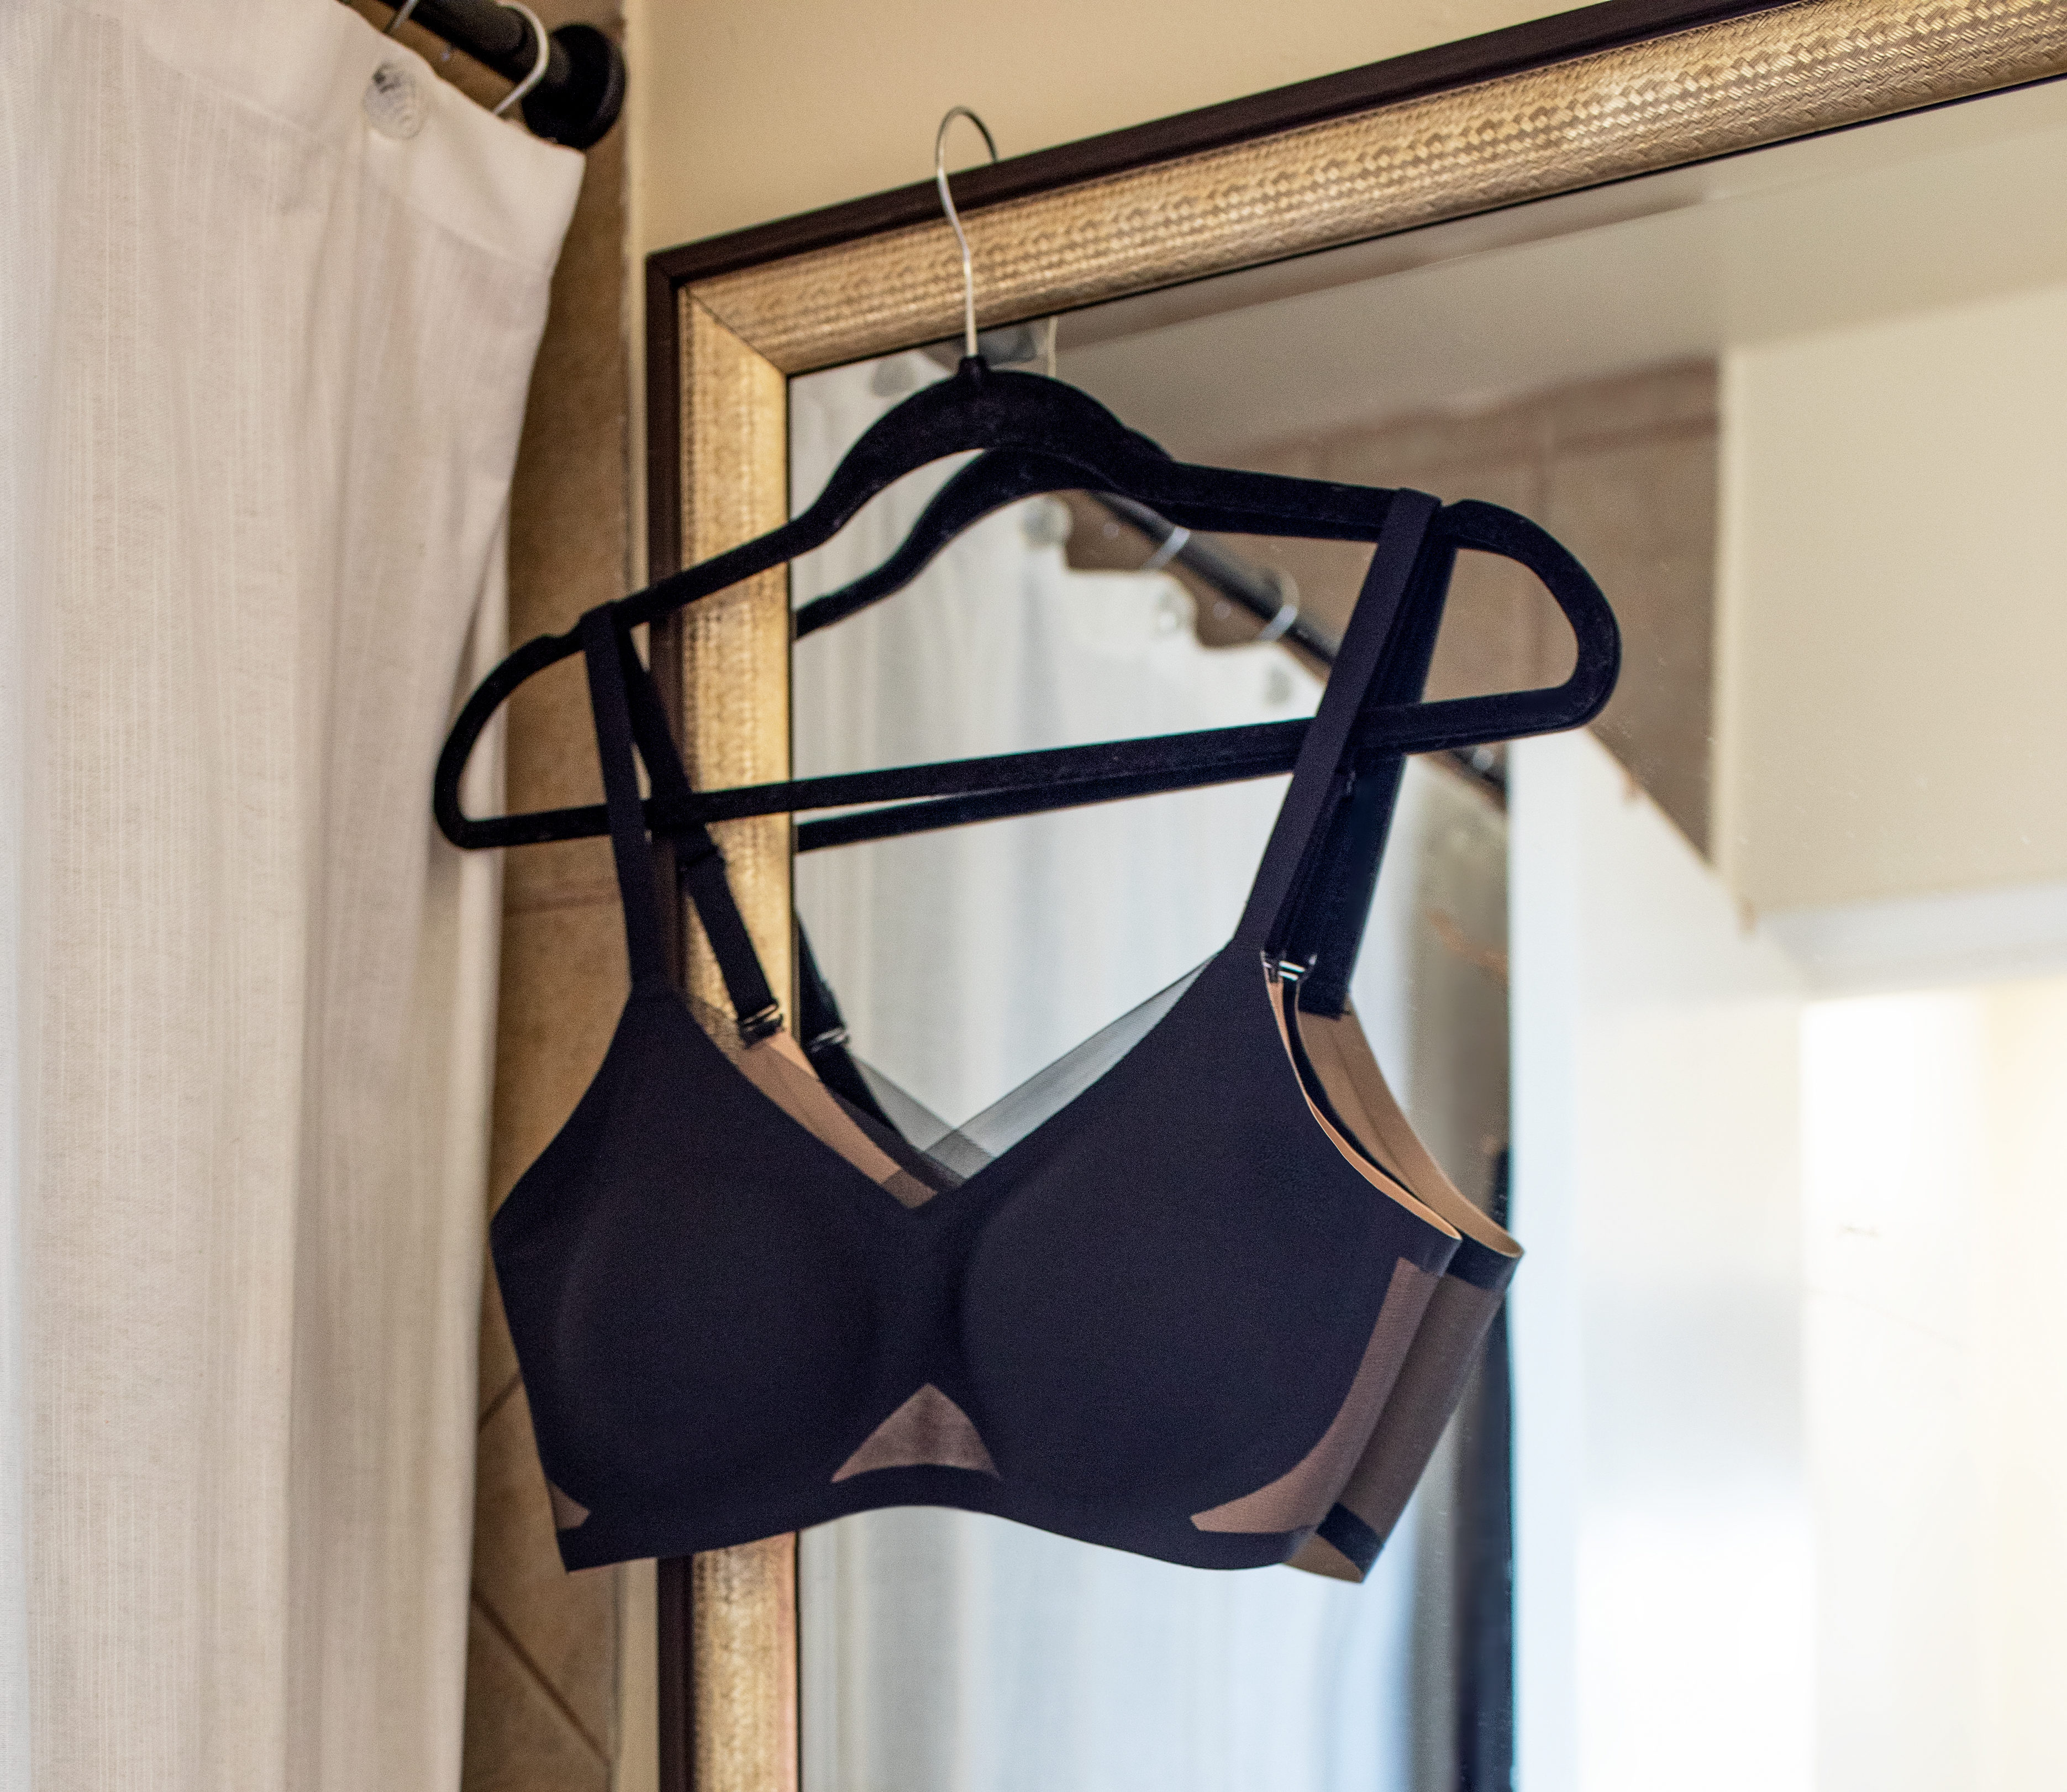 Honeylove Blog: The secret world of plus-size bras